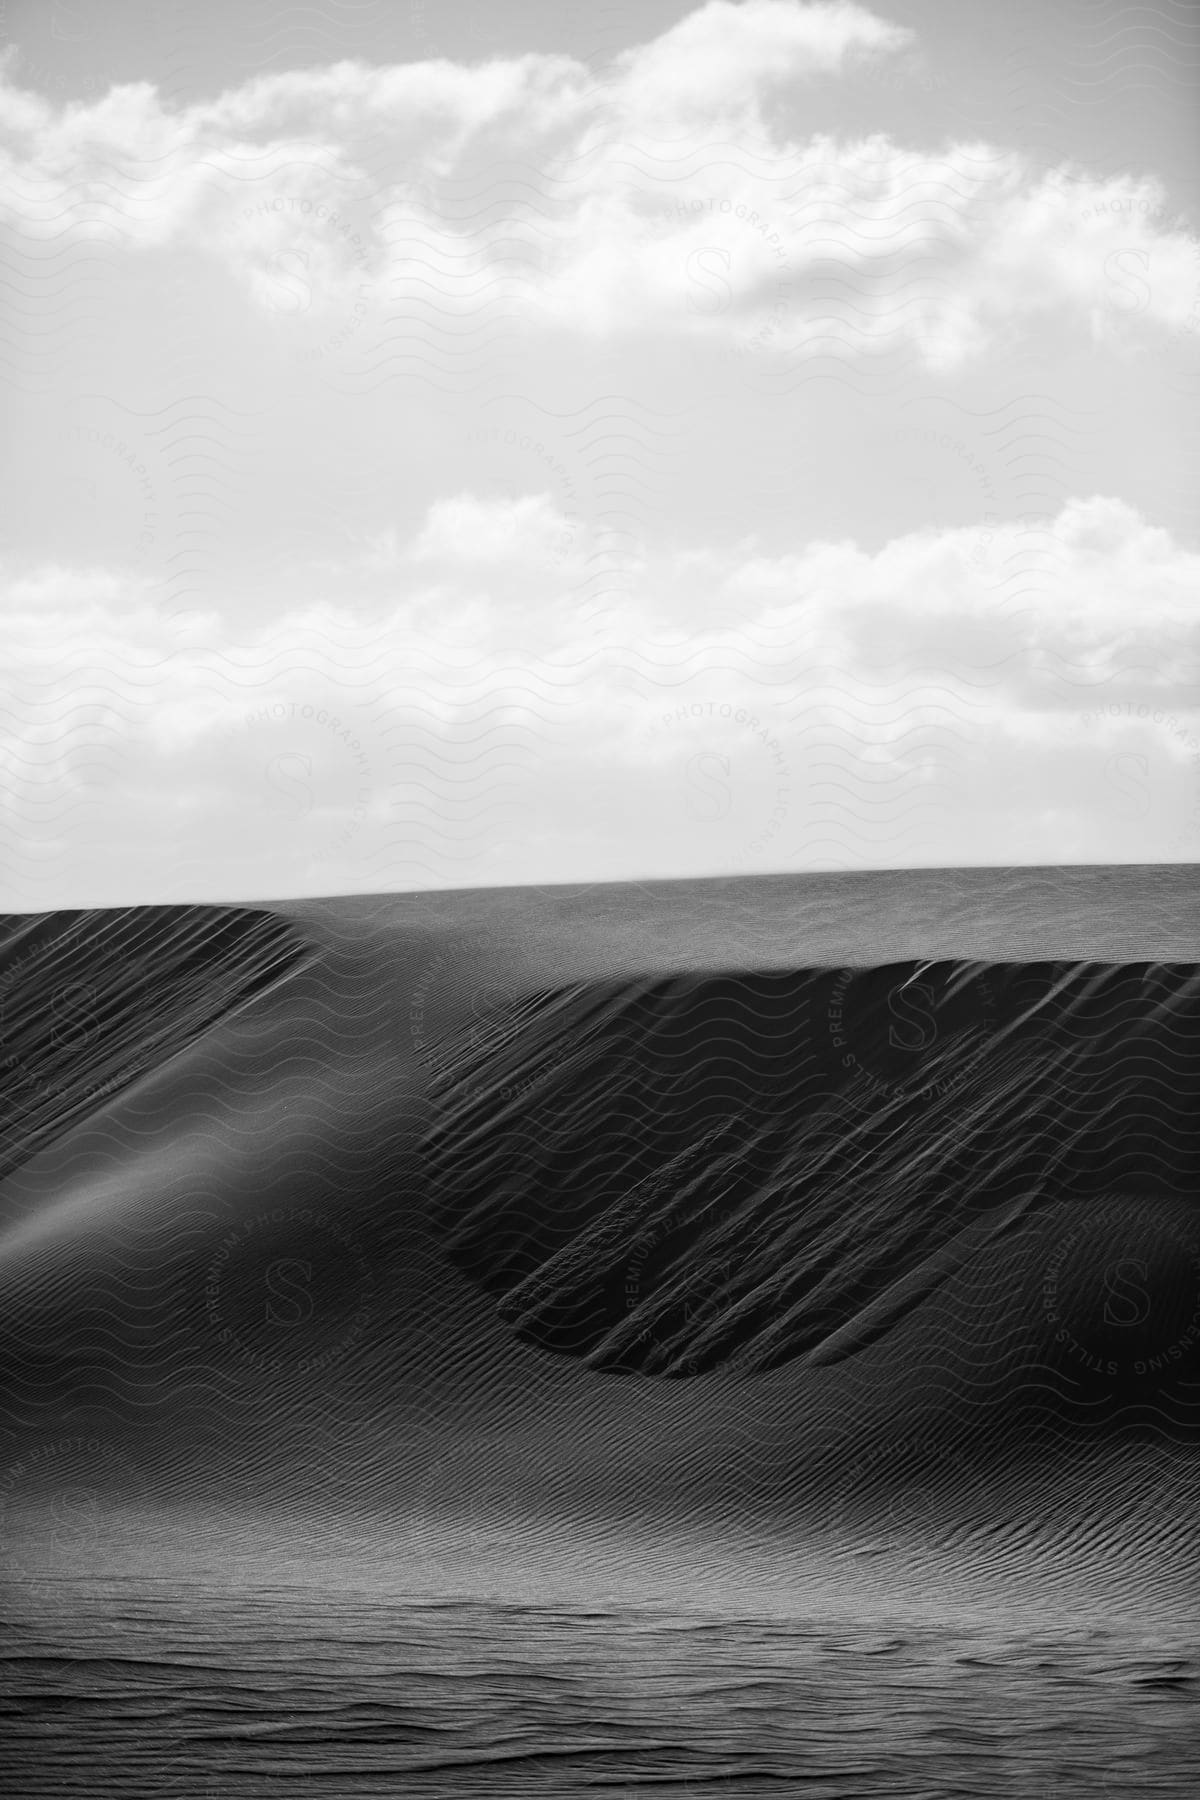 Landscape of a sand dune in the desert